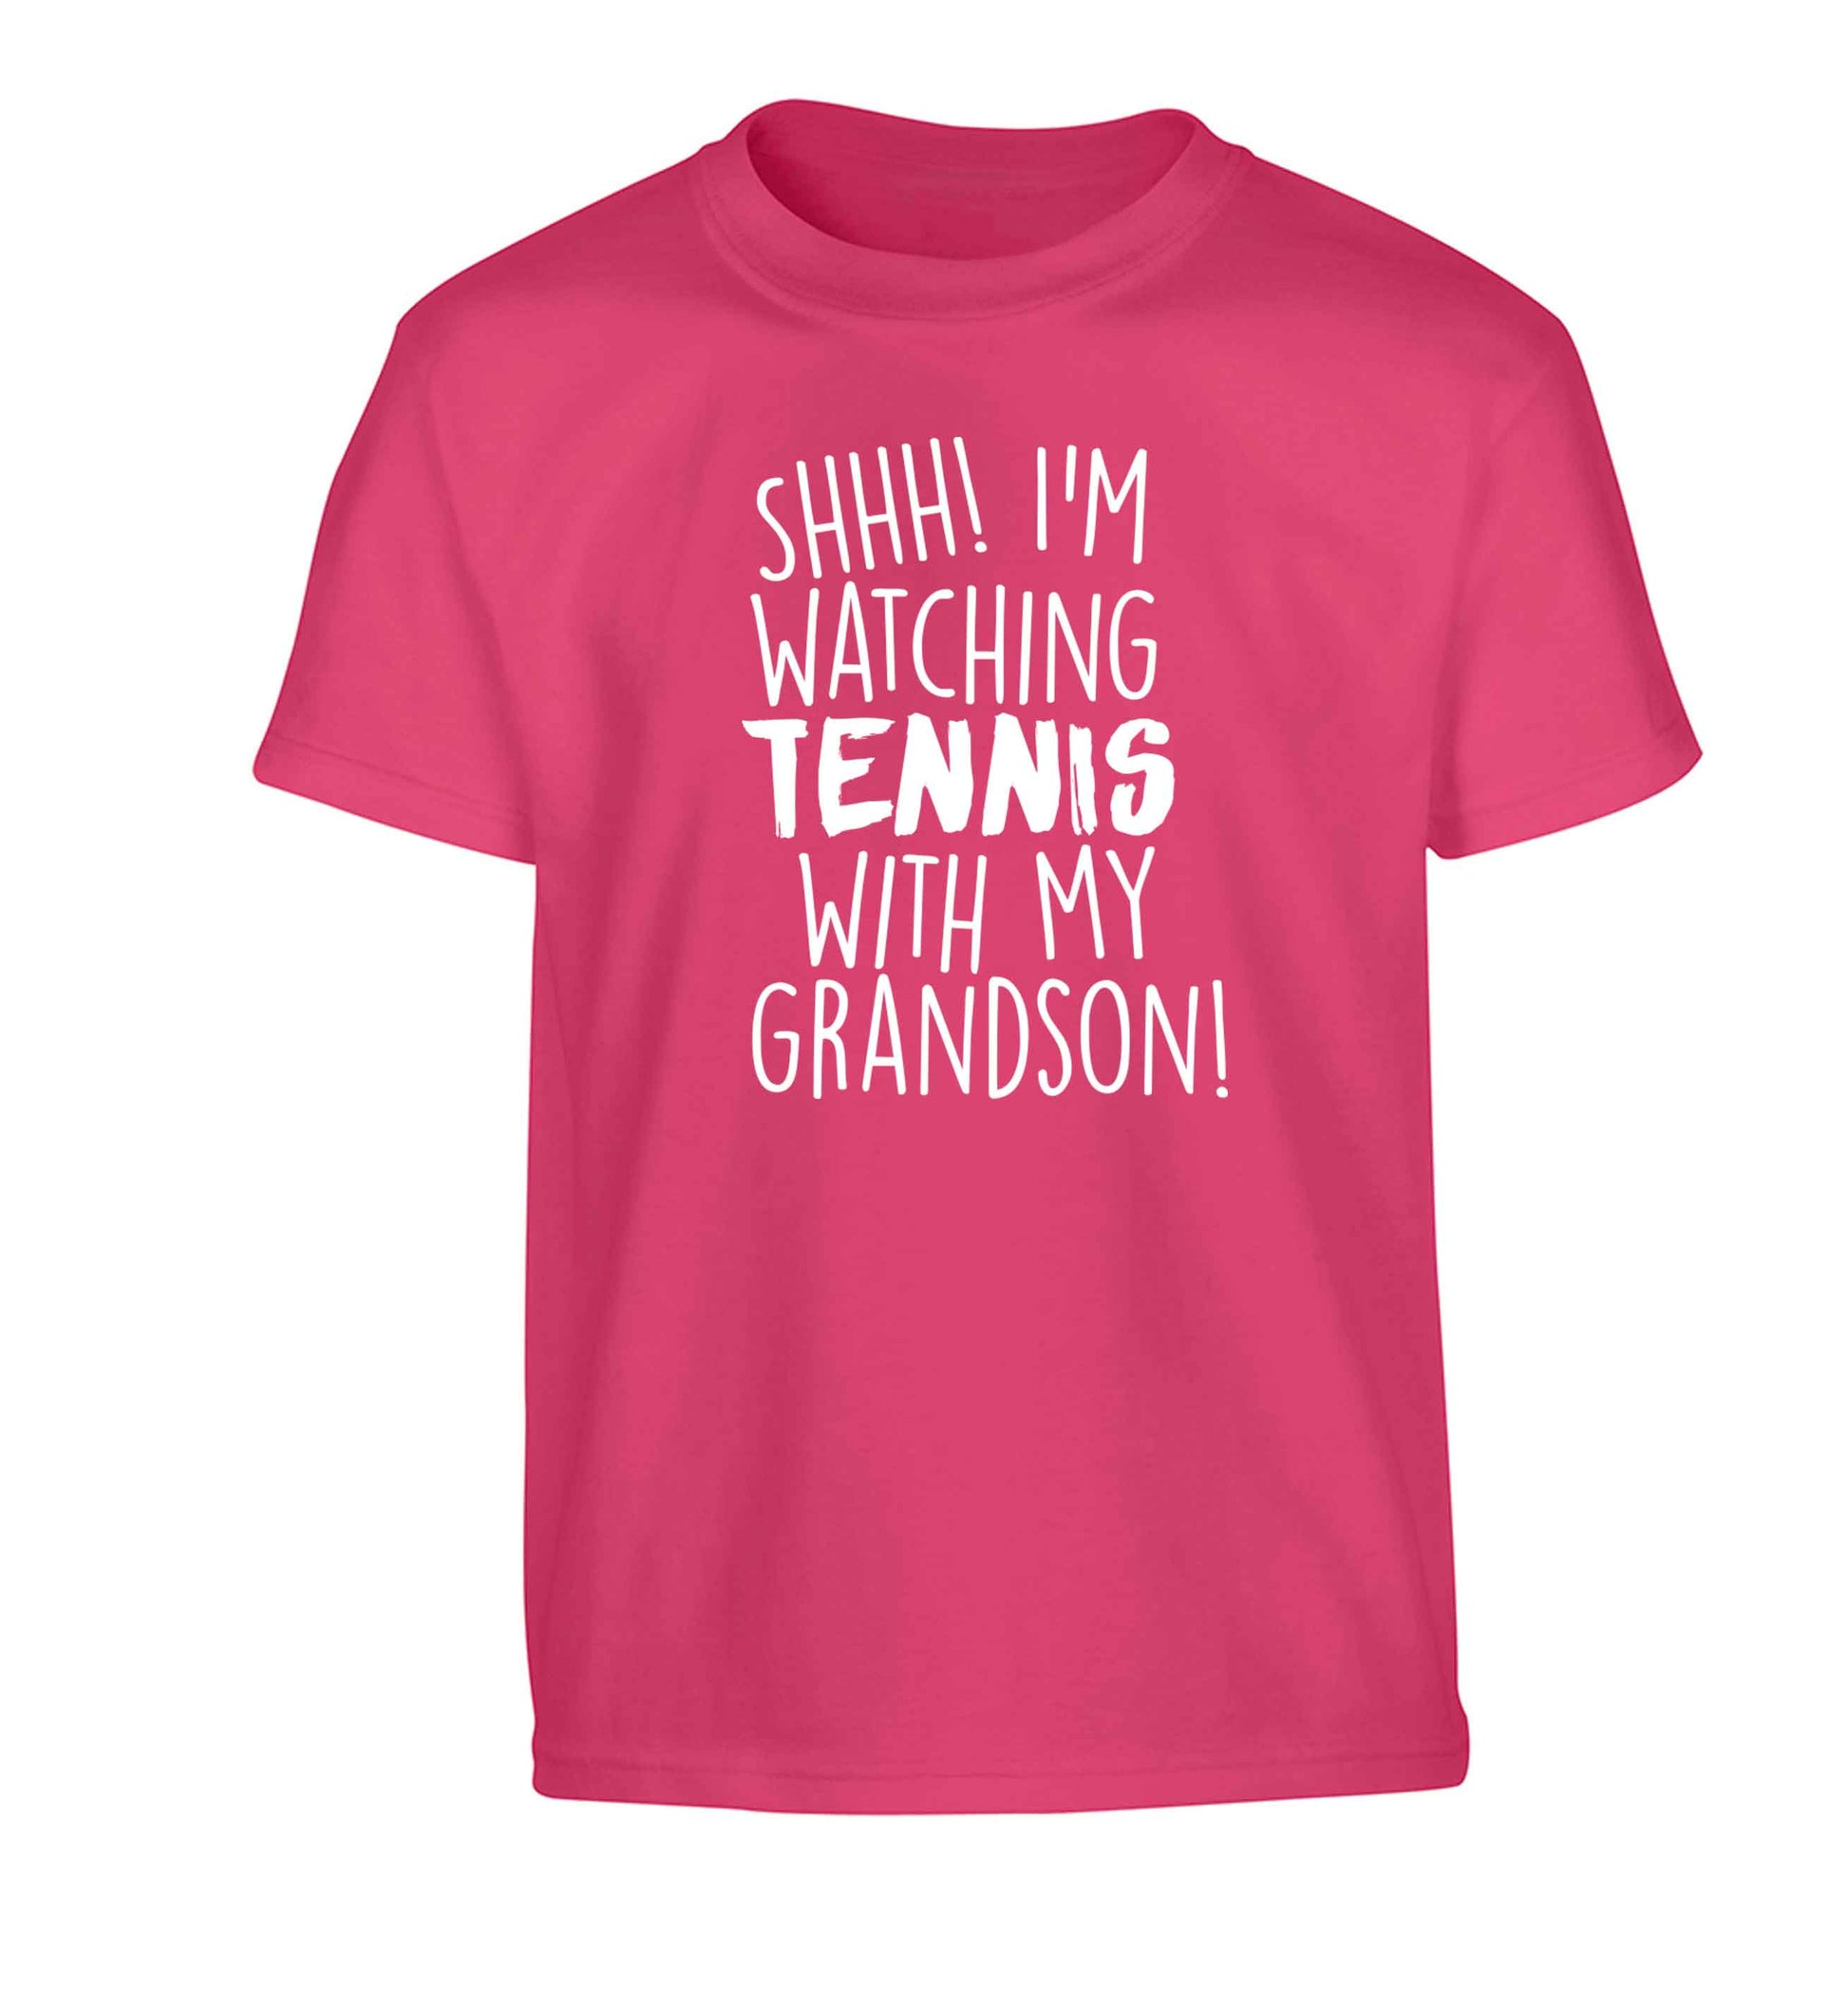 Shh! I'm watching tennis with my grandson! Children's pink Tshirt 12-13 Years